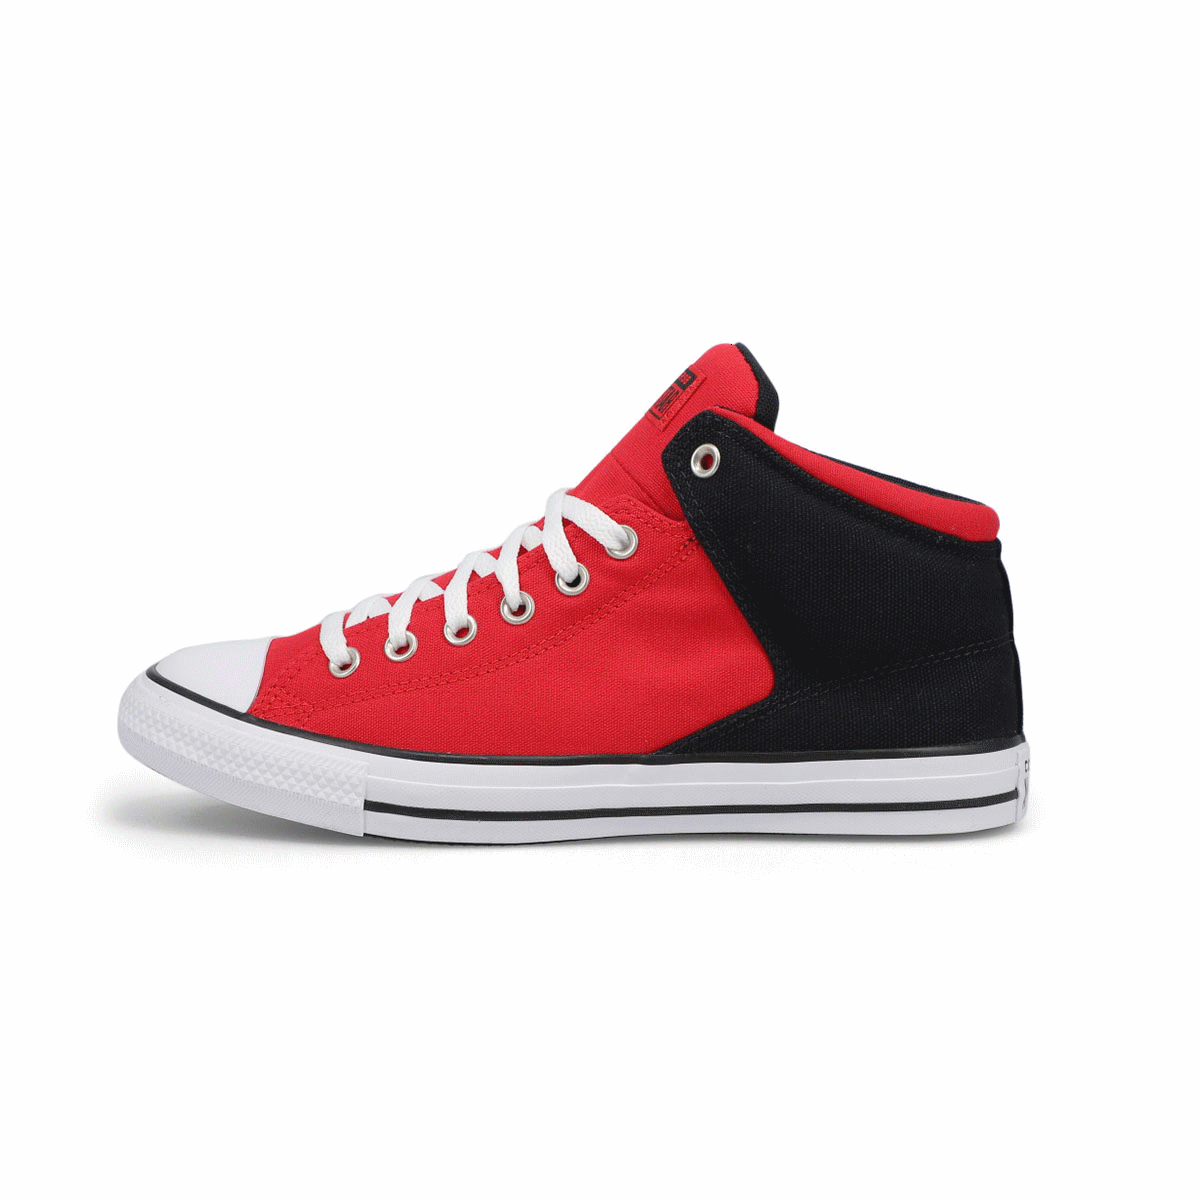 Converse Chuck Taylor All Star High Street Sneaker - Men's - Free Shipping